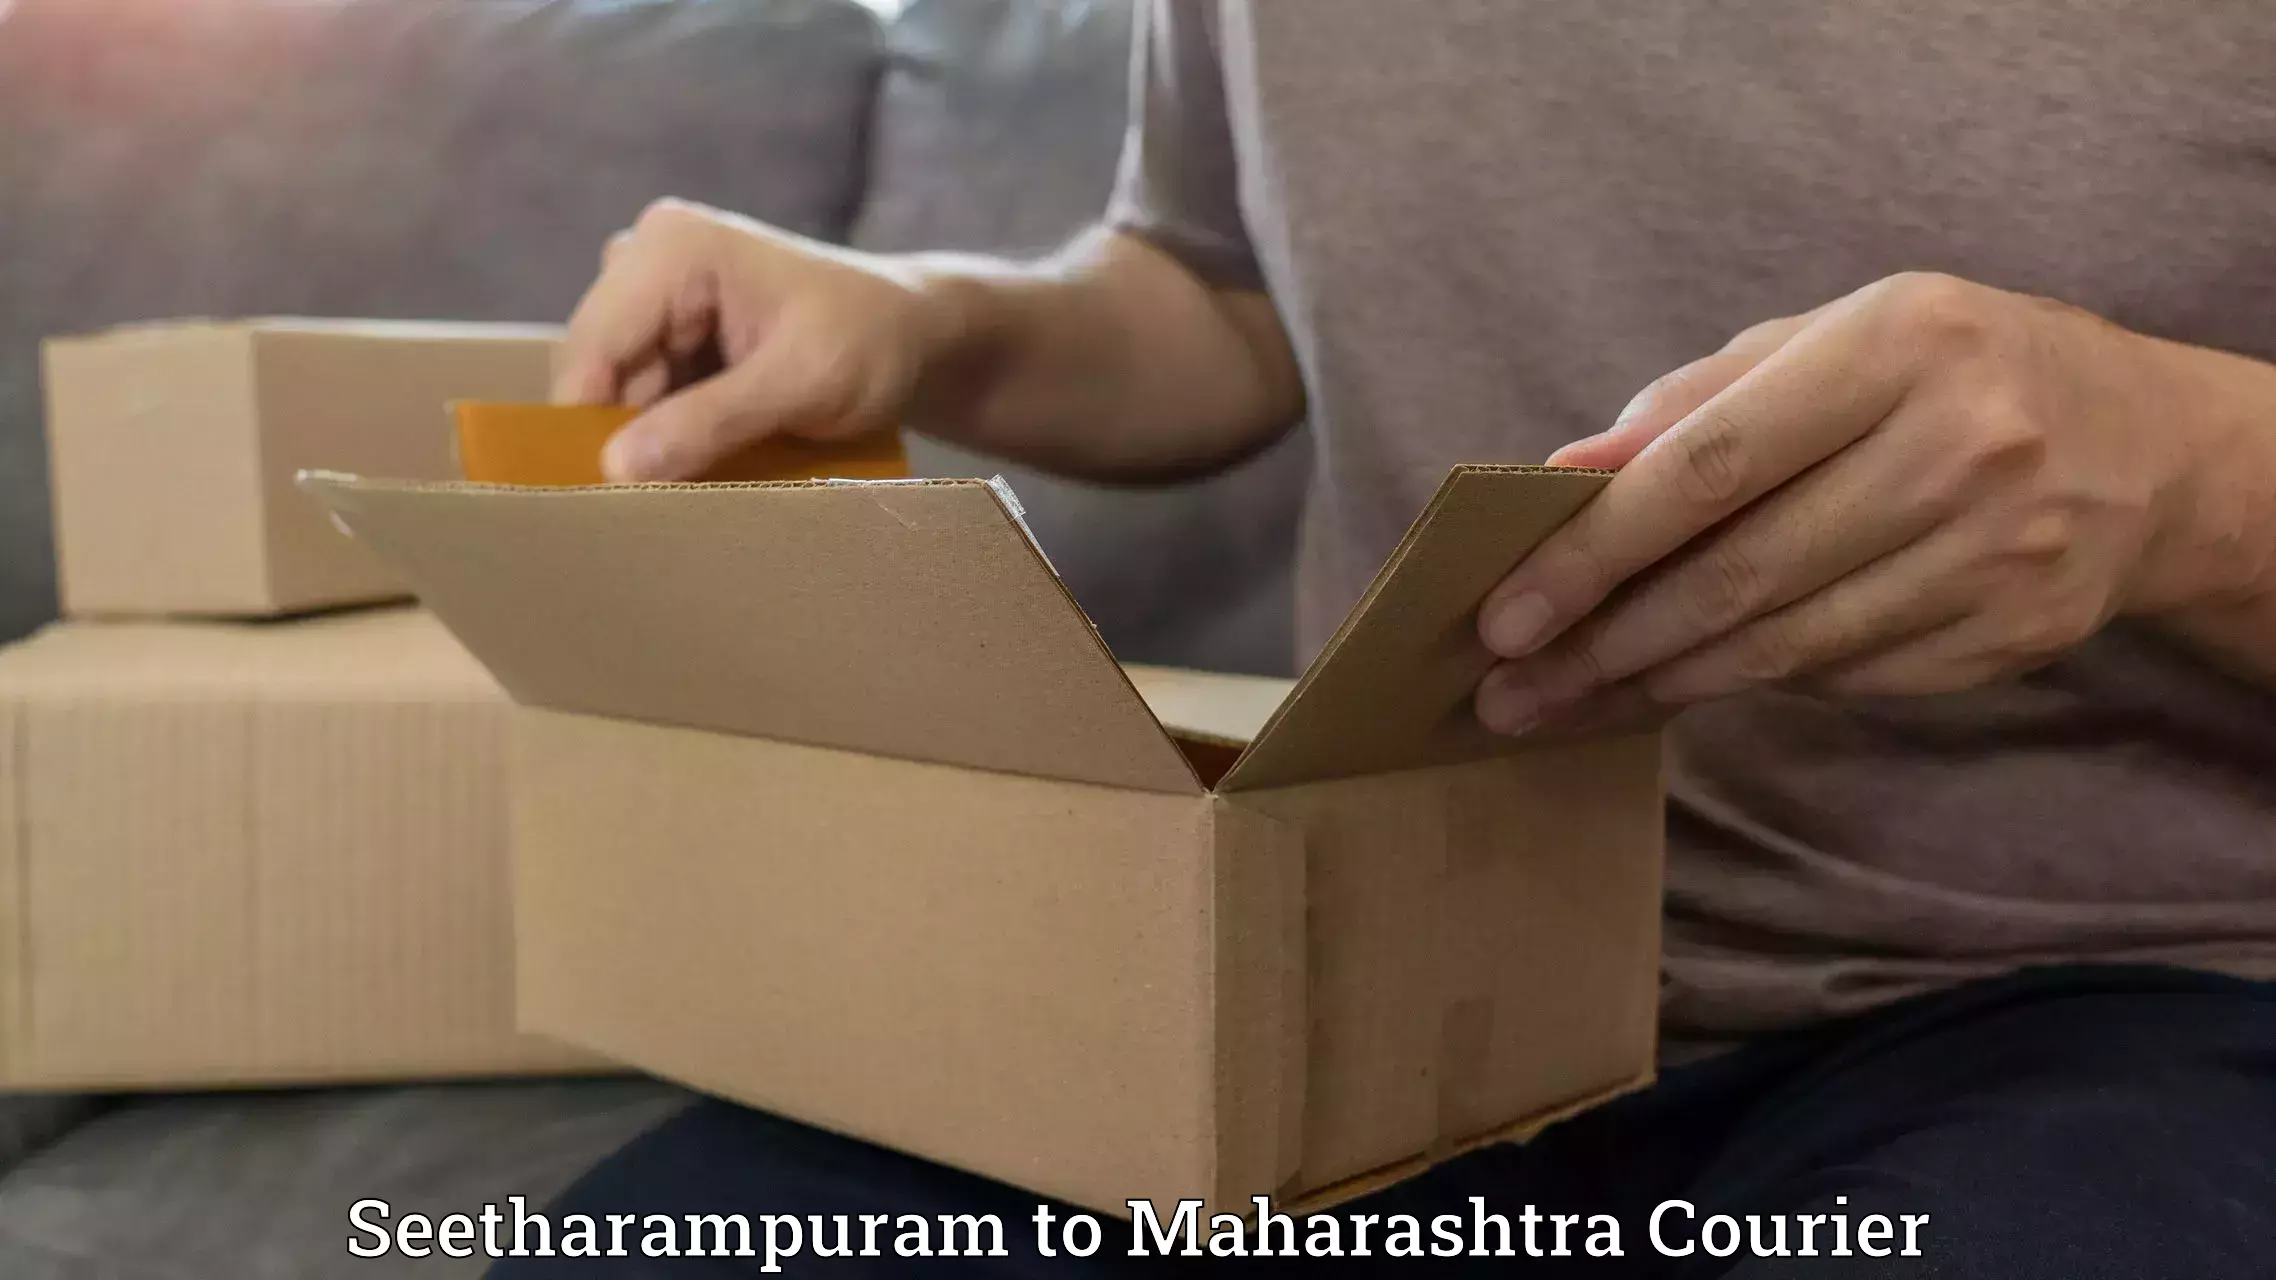 Digital courier platforms Seetharampuram to Maharashtra